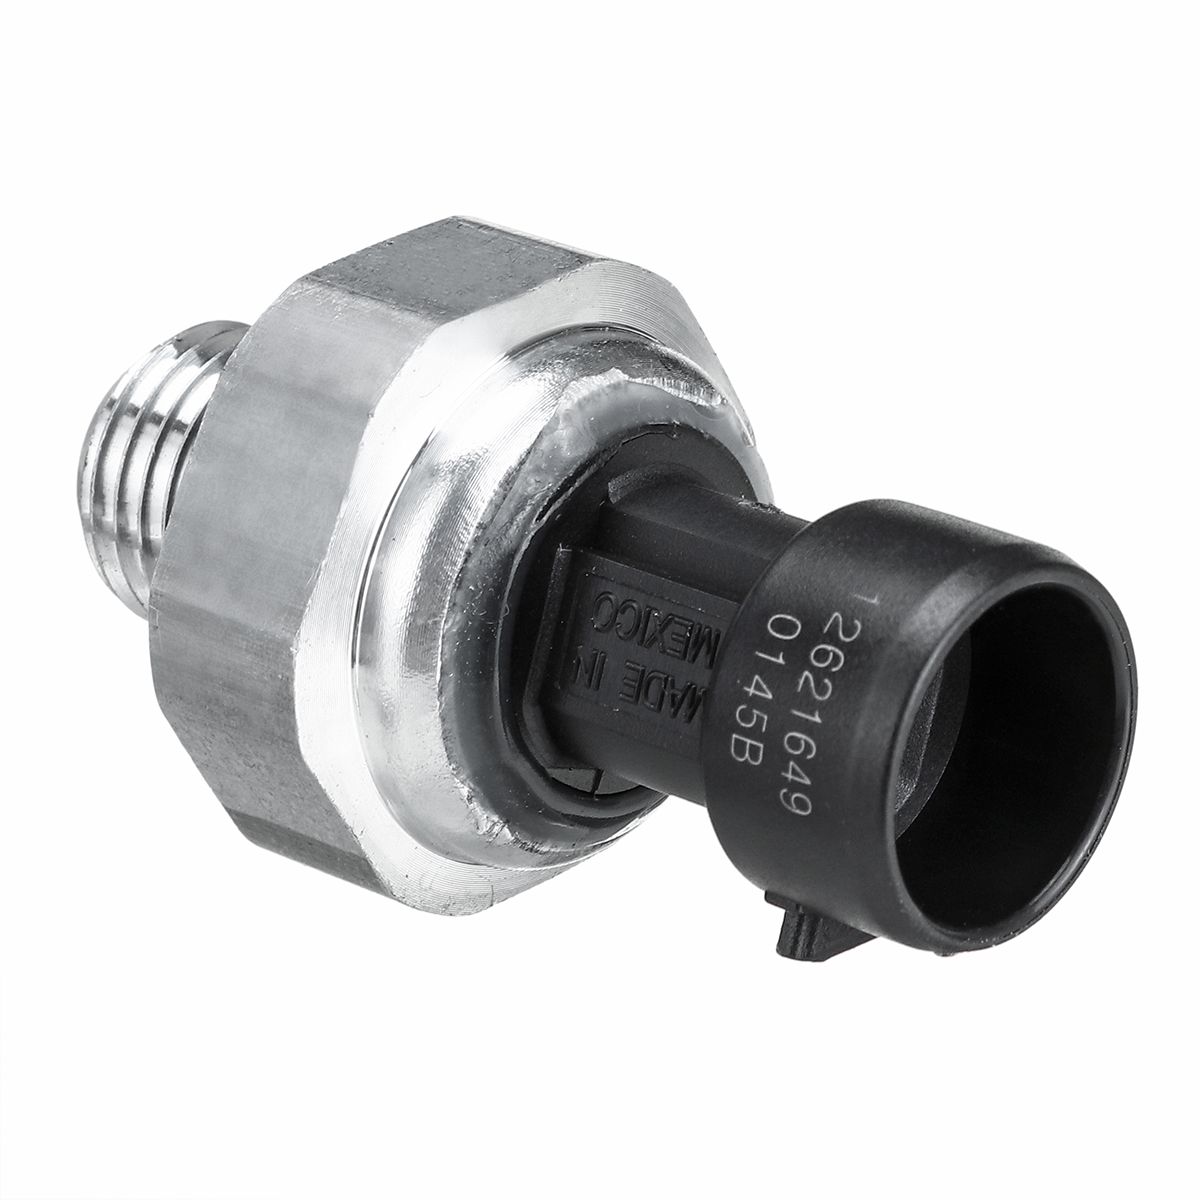 Oil-Pressure-Switch-Sensor-For-Holden-CommodoreChevrolet-Impala-Malibu-1671377